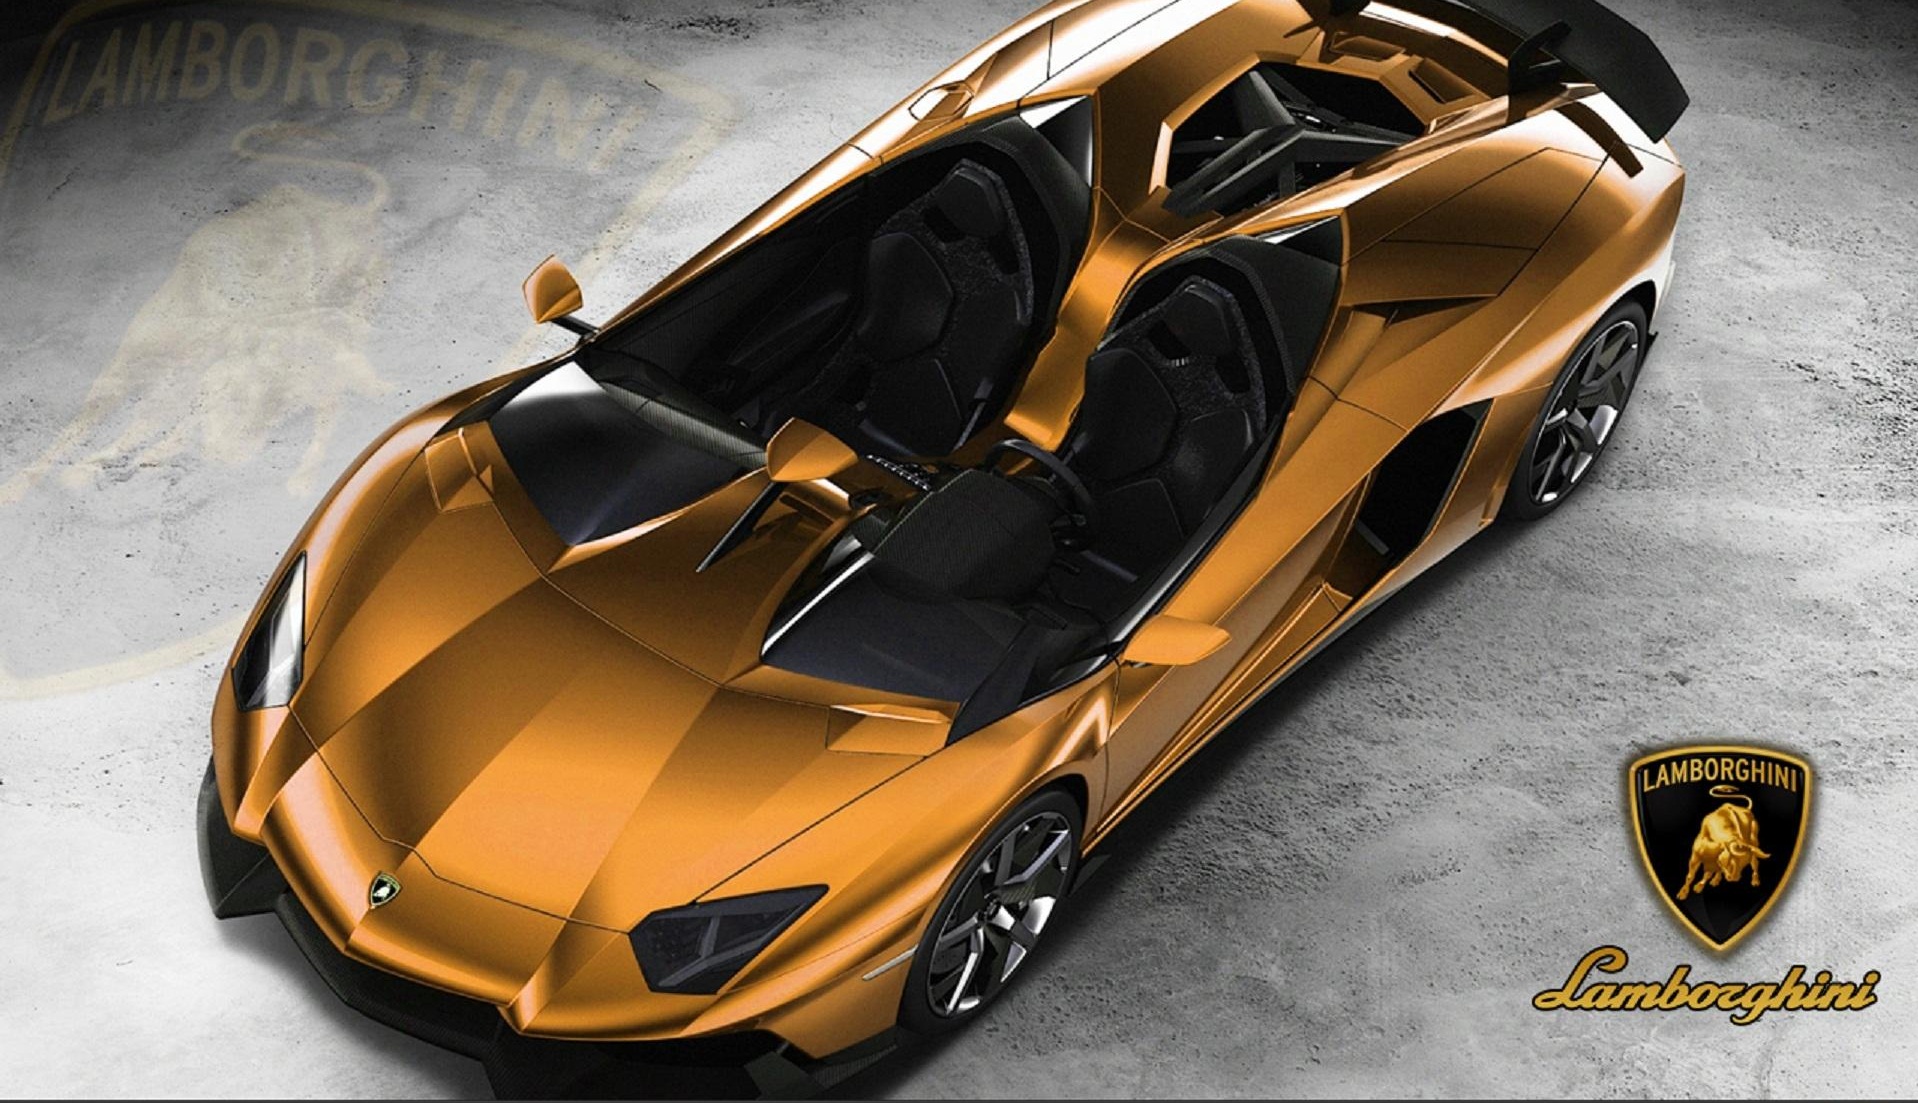 Lamborghini Aventador J Gold HD Wallpaper Background Image